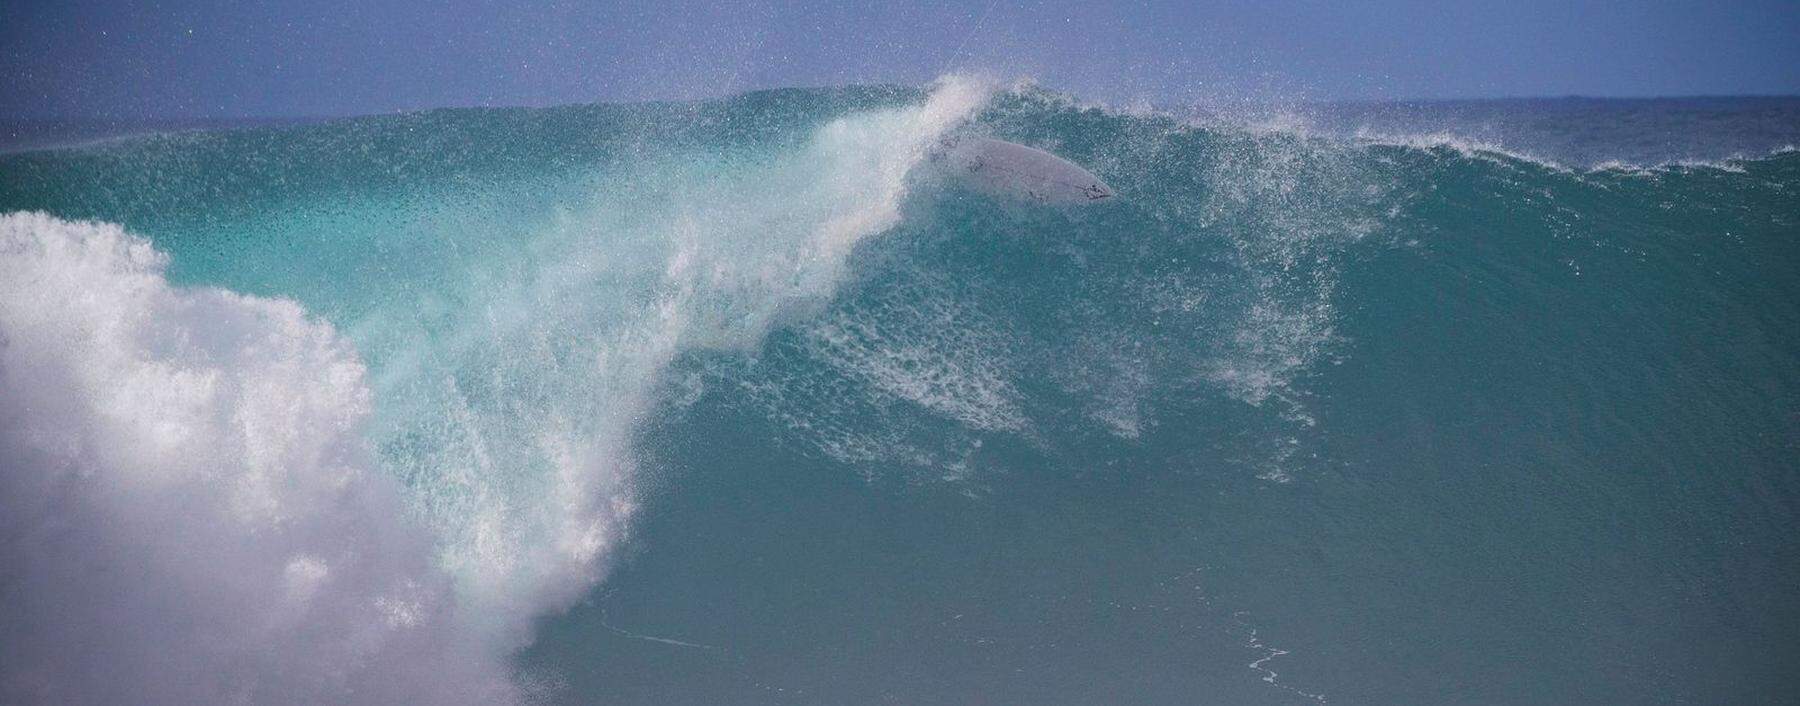 TOPSHOT-HAWAII-SURFING-PIPELINE